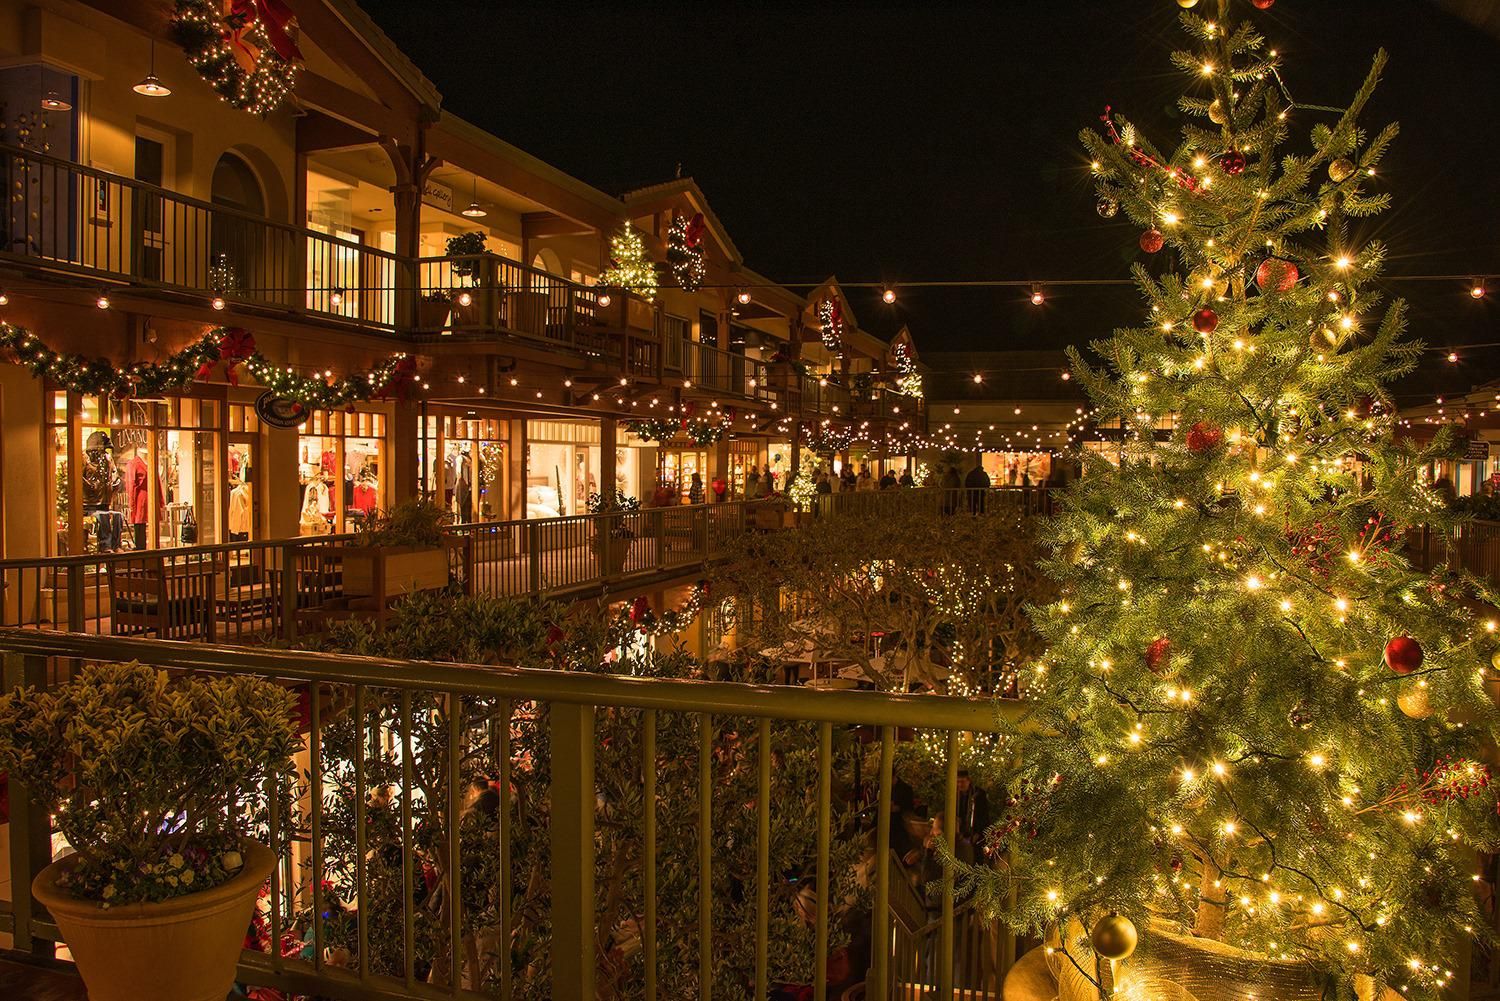 Holiday in Carmel: A cozy inn, quaint shops + seasonal fare make for a storybook Christmas